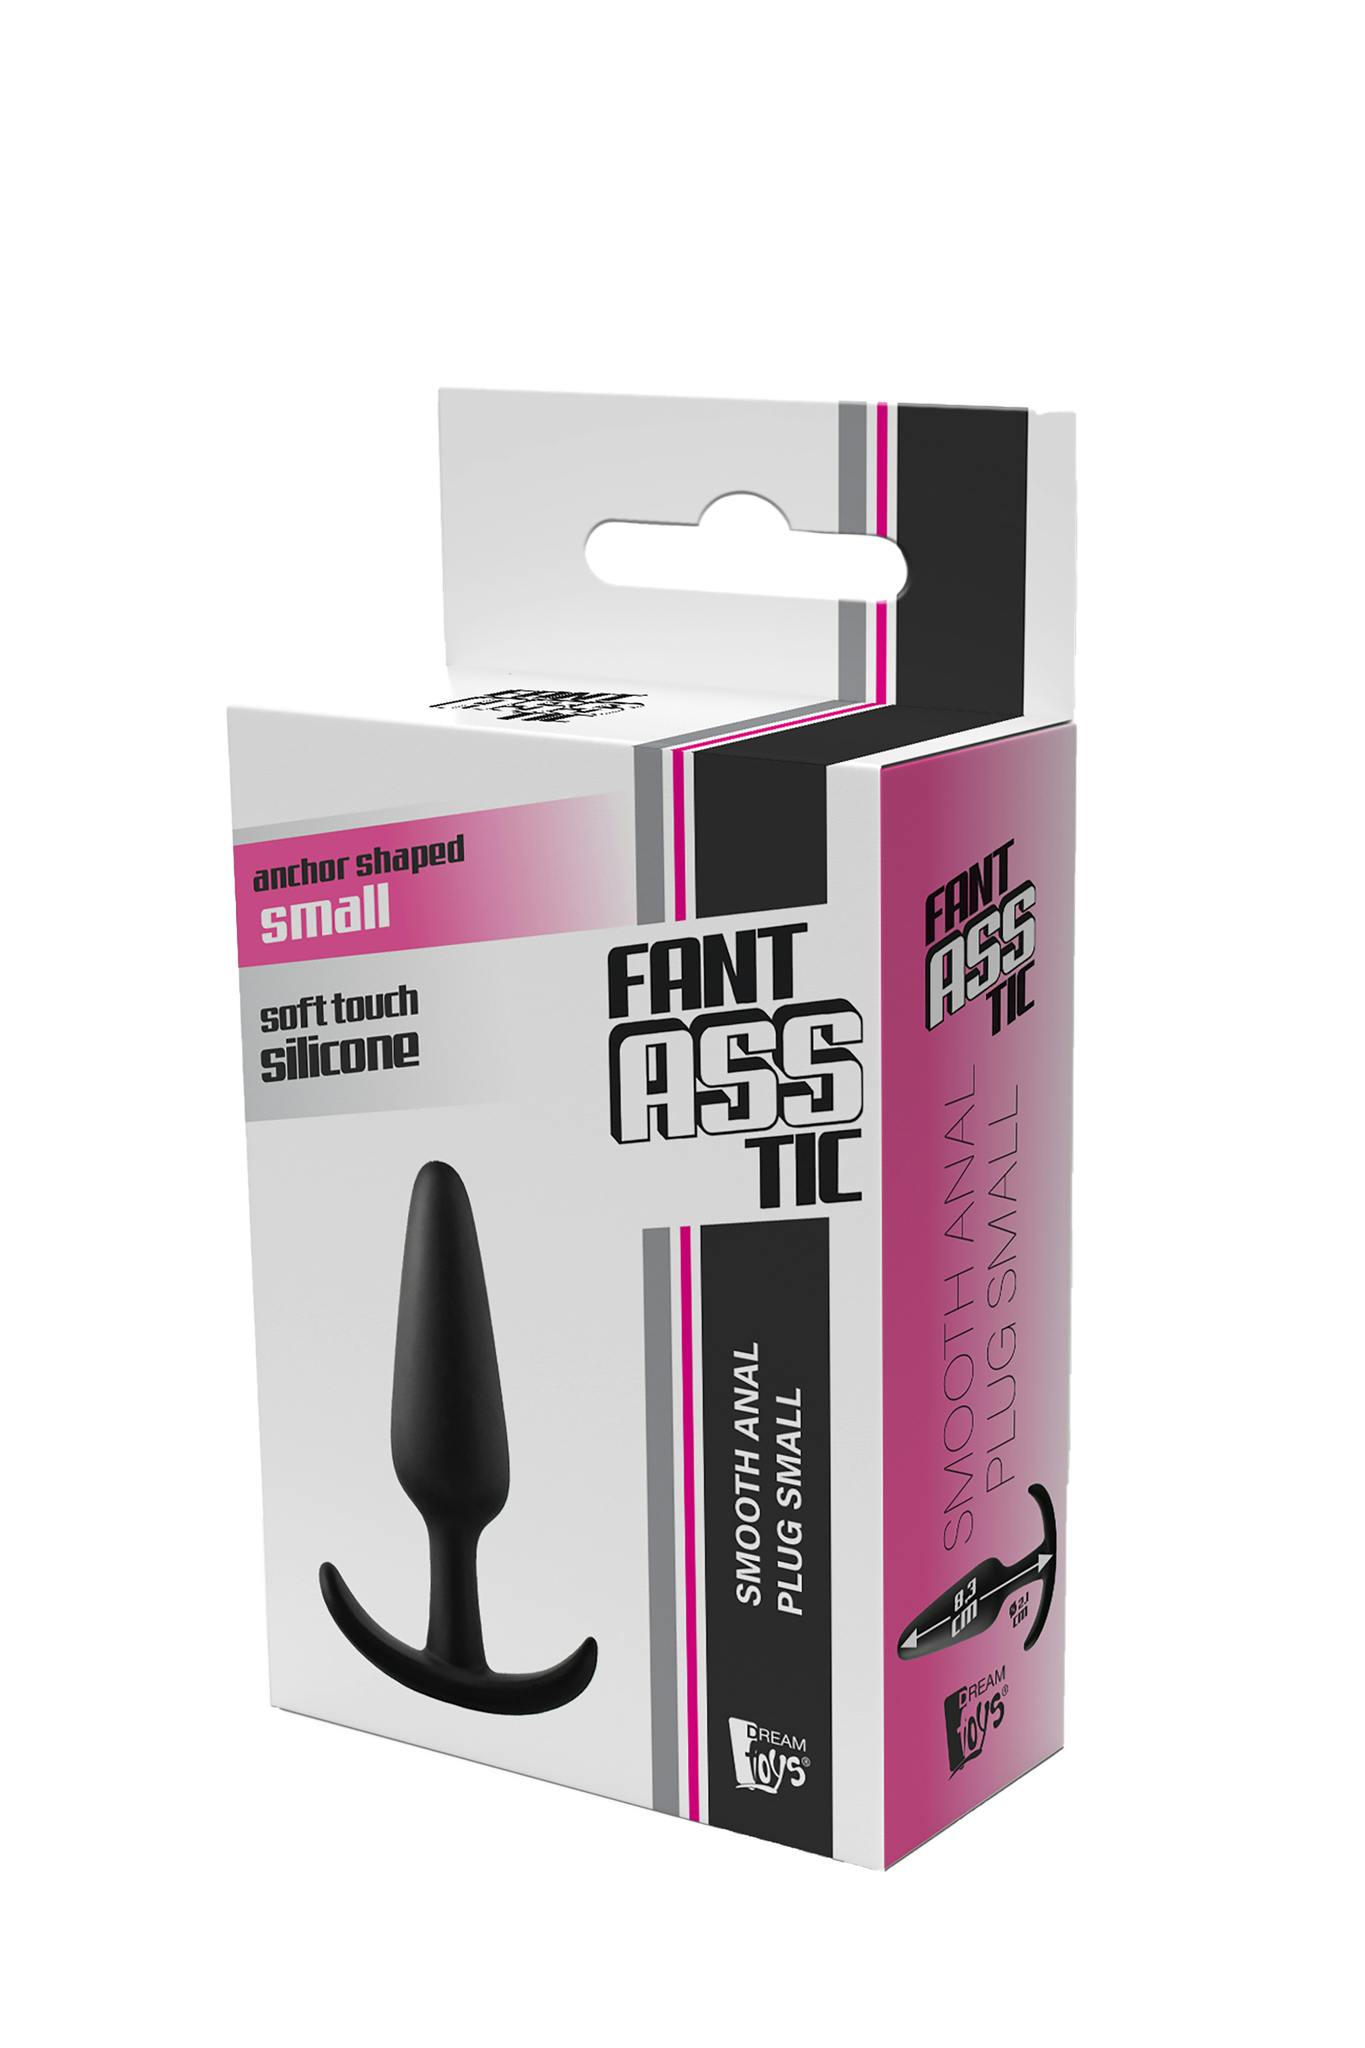 Fantasstic - Smooth anal plug, Small